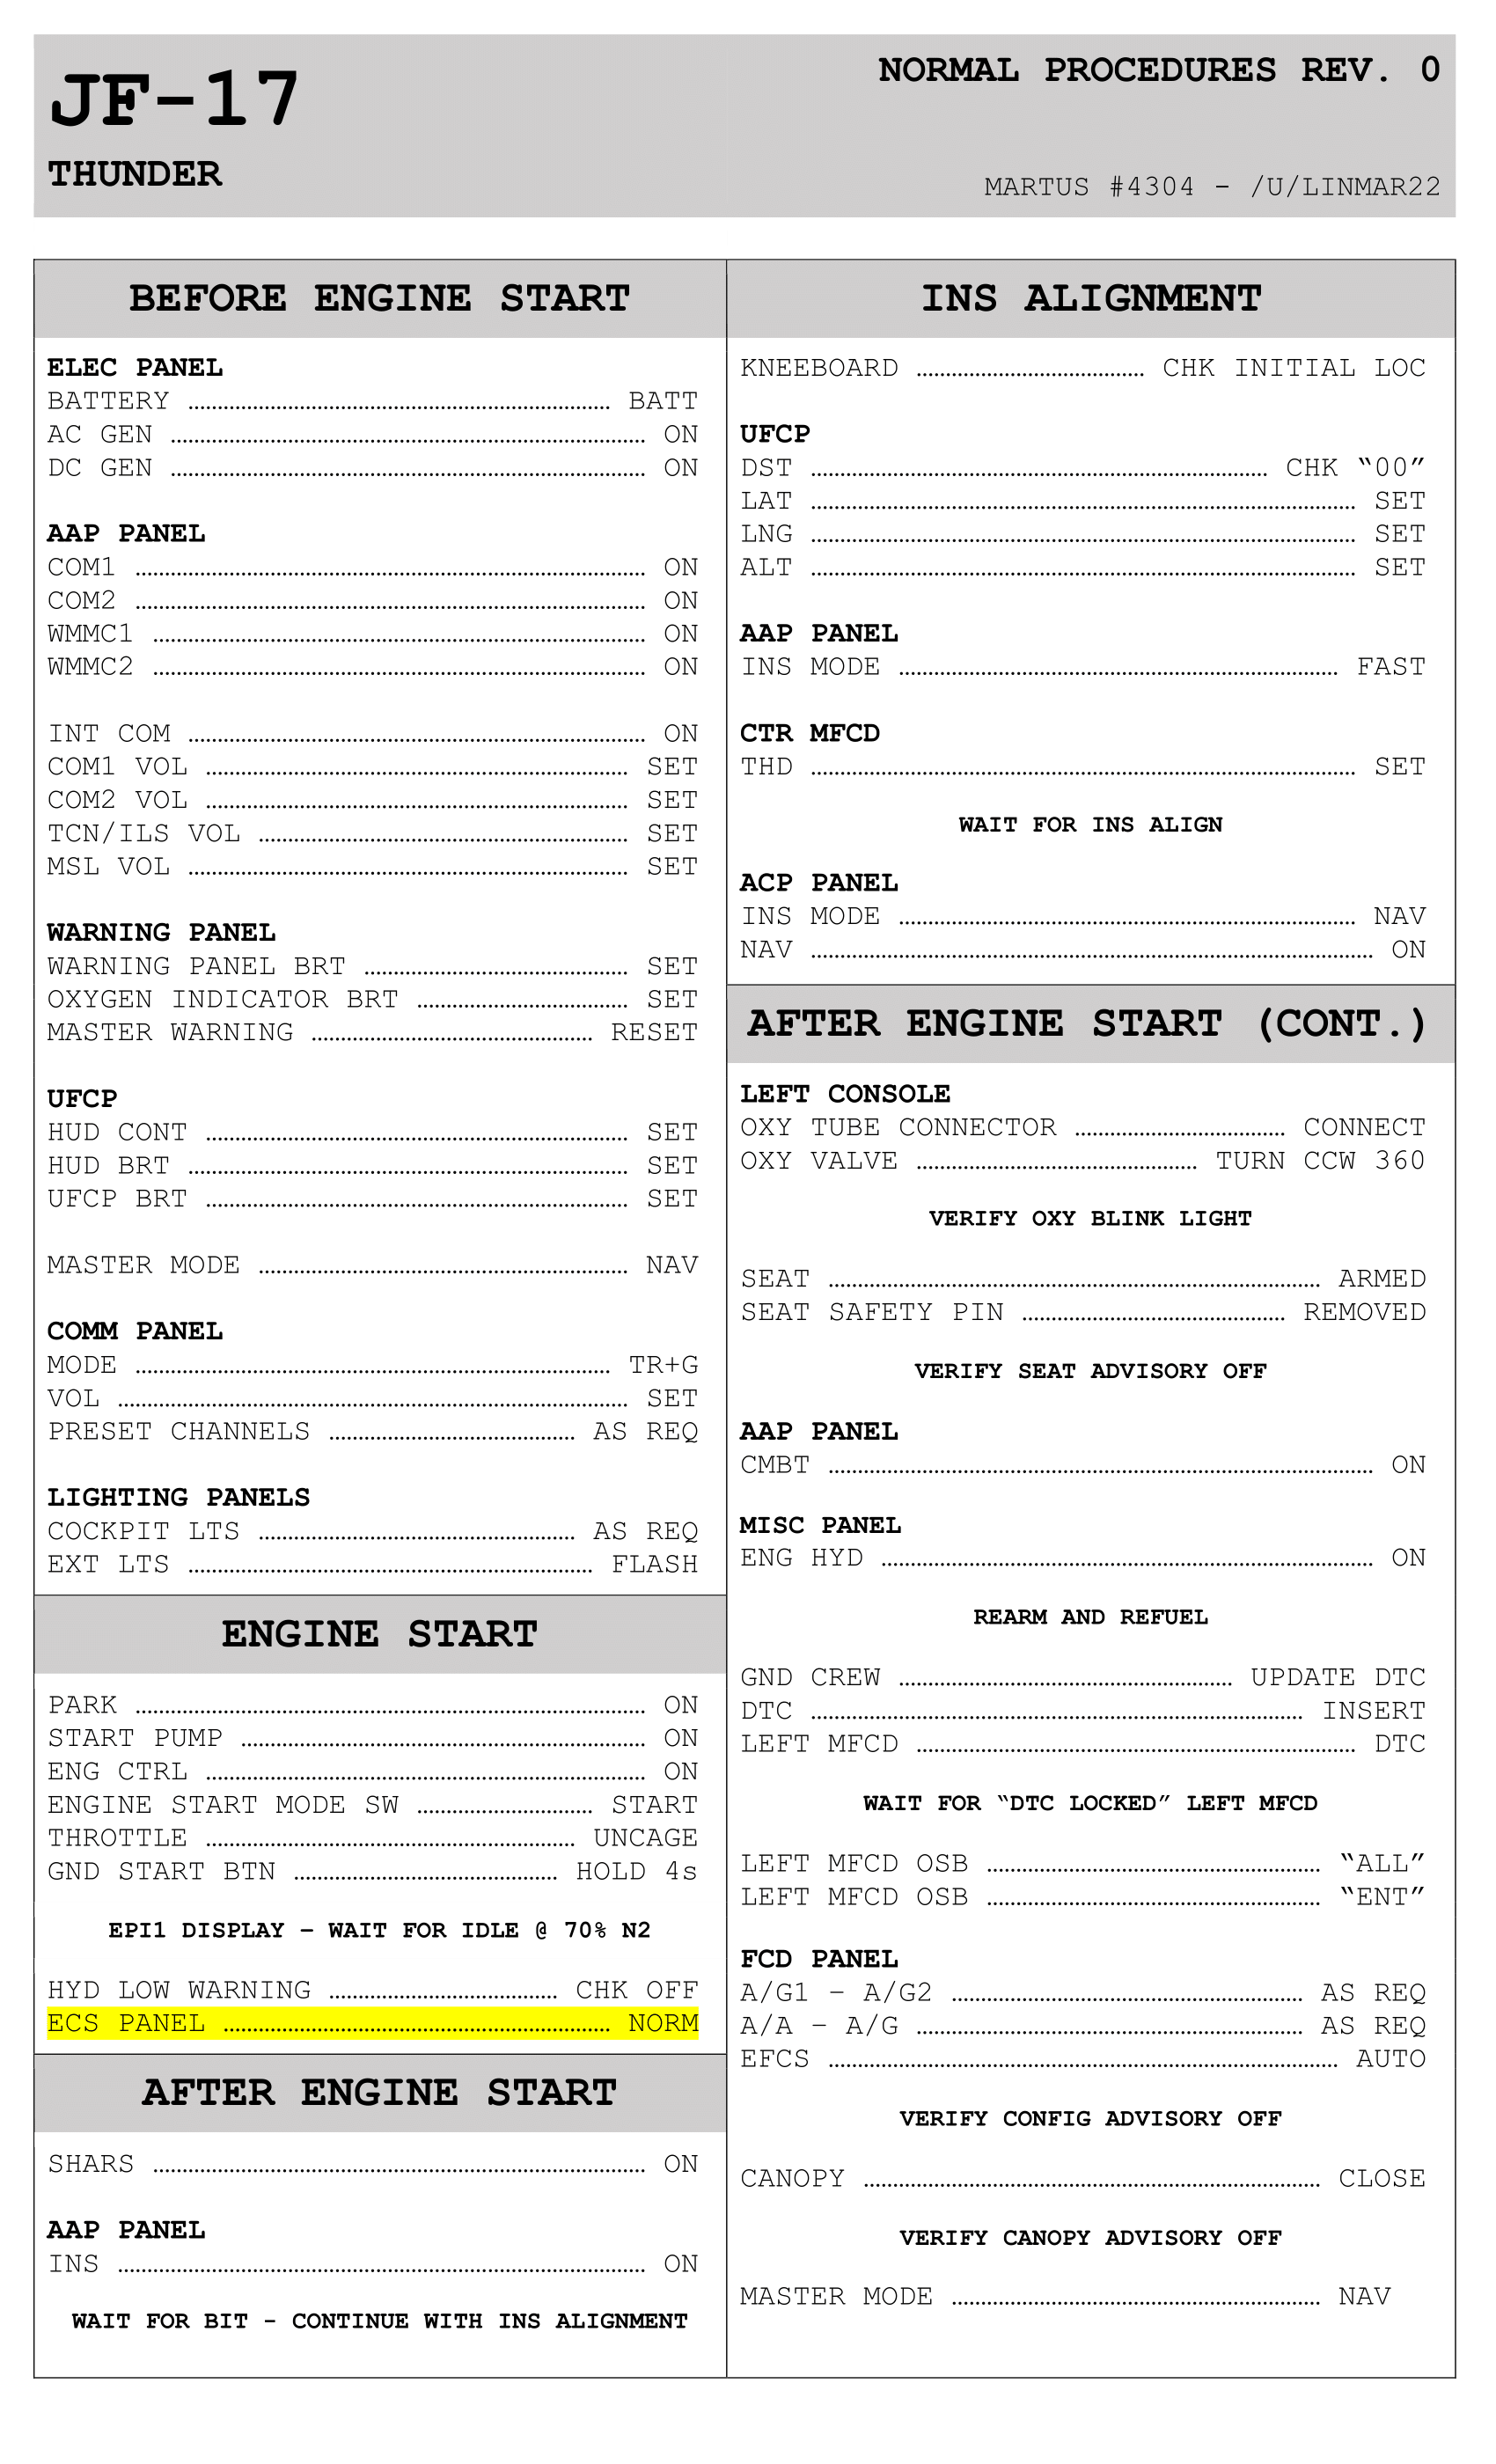 JF-17 Normal procedure checklists (4k)